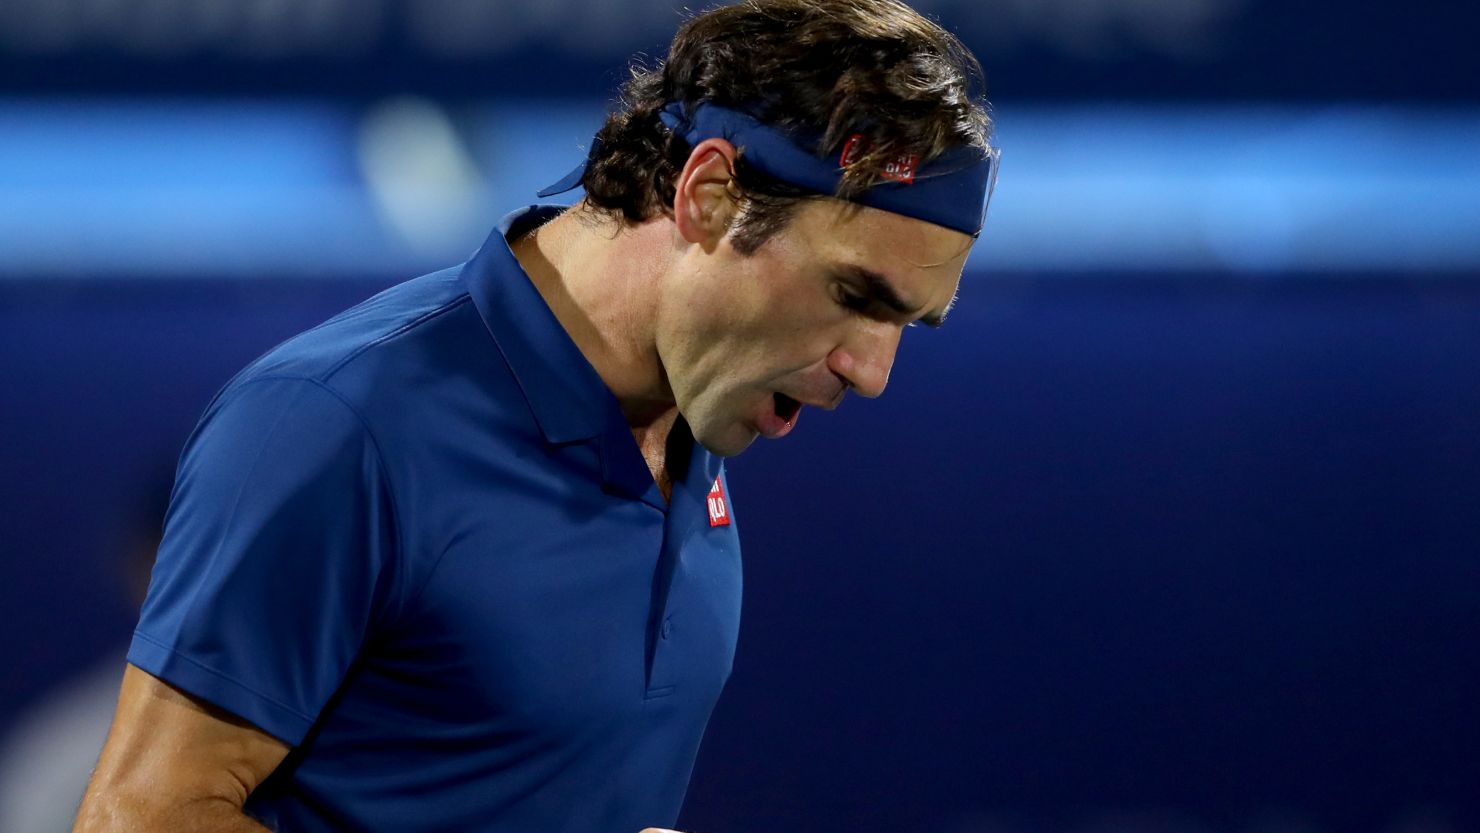 A pumped up Roger Federer reacts after winning the first set of the Dubai Open final against Stefanos Tsitsipas of Greece.